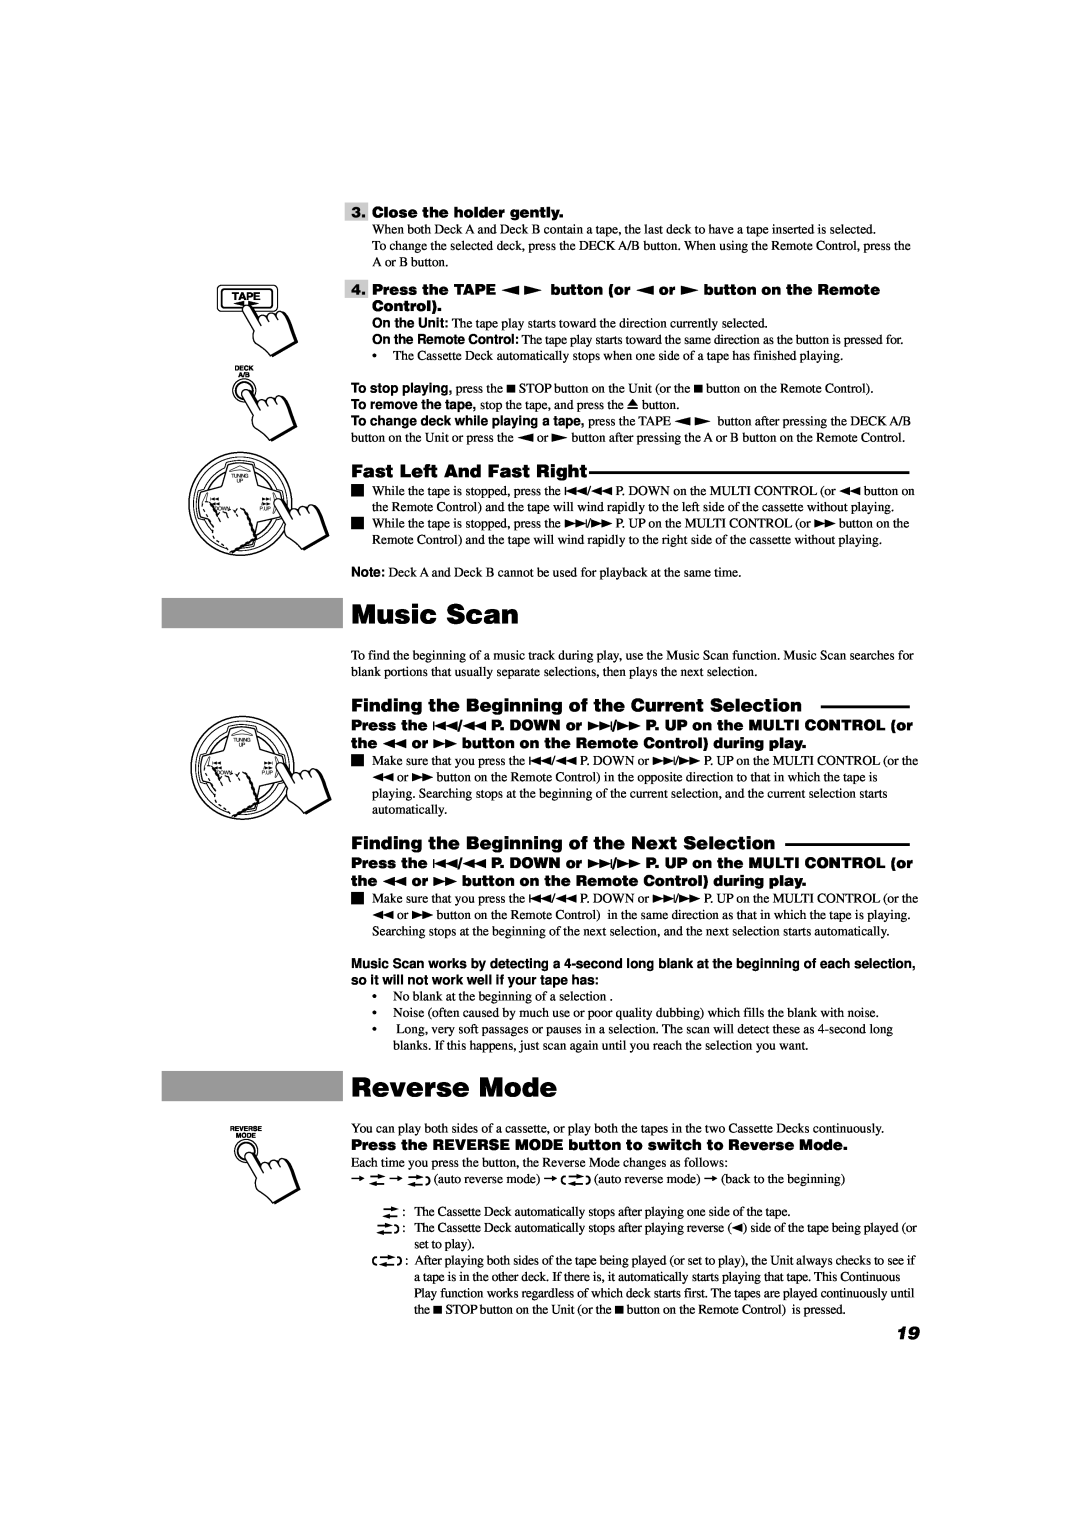 JVC SP-D302 manual Music Scan, Reverse Mode 